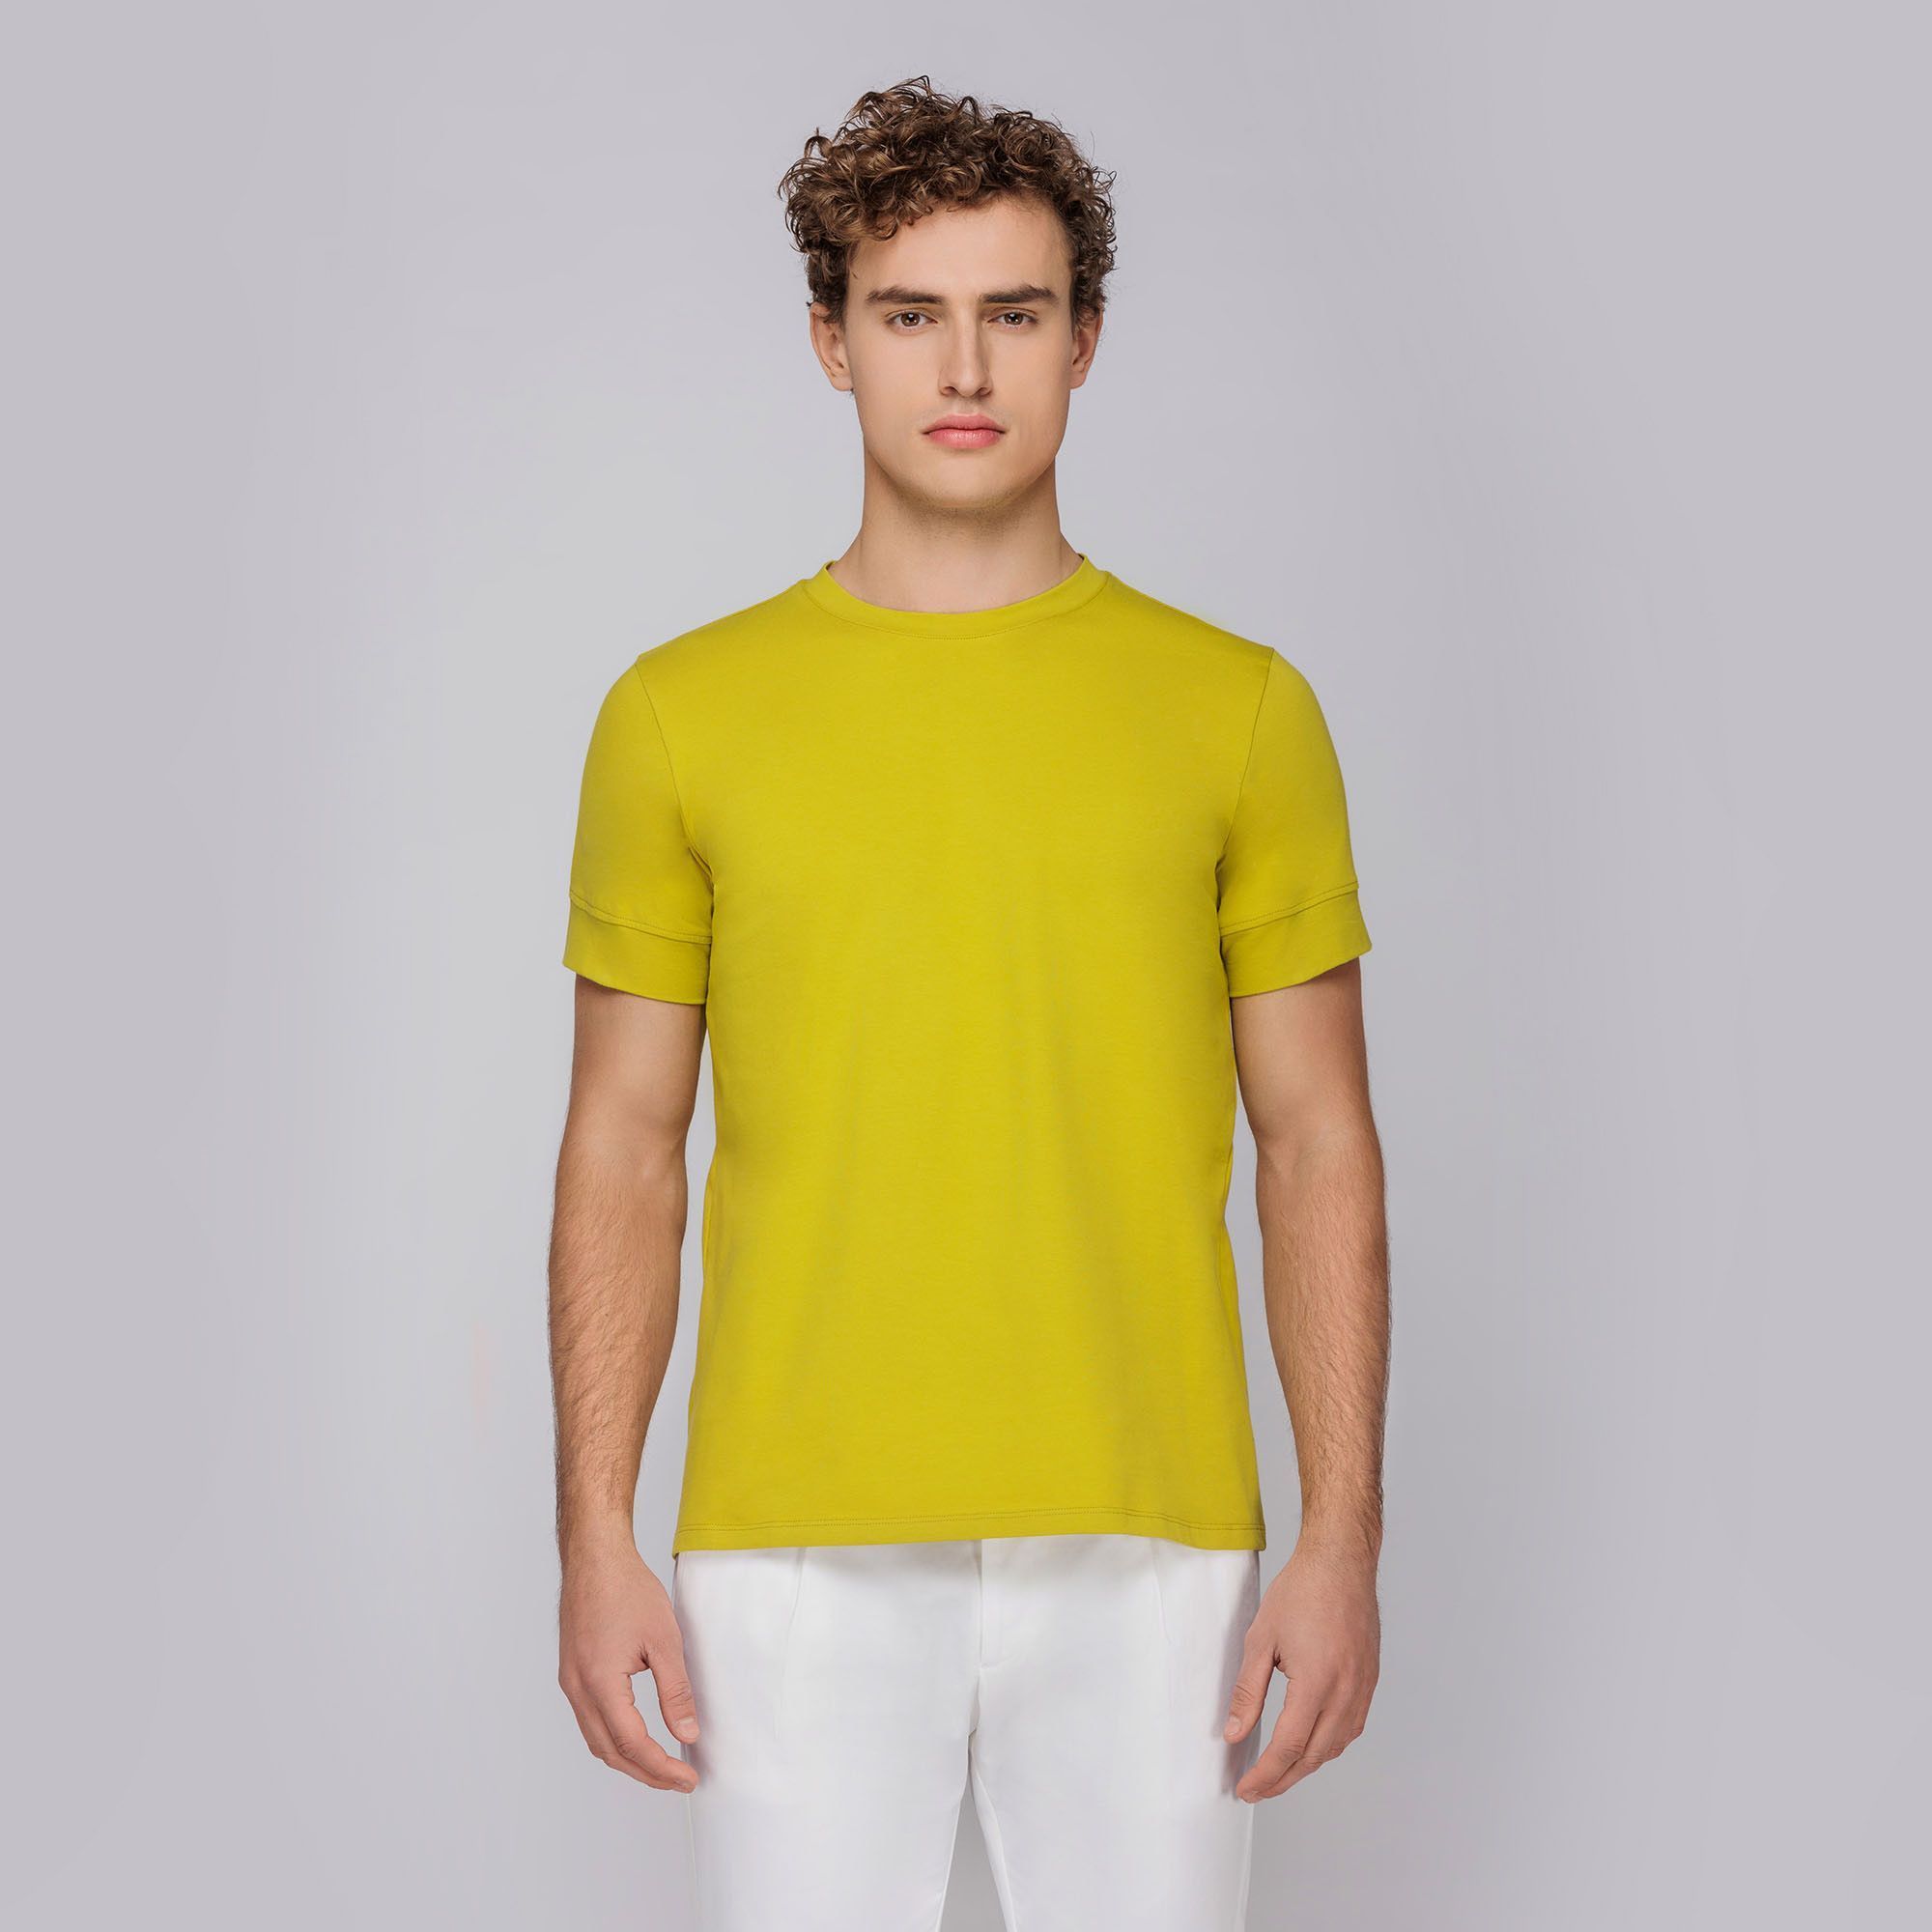 Men's Yellow T-shirt